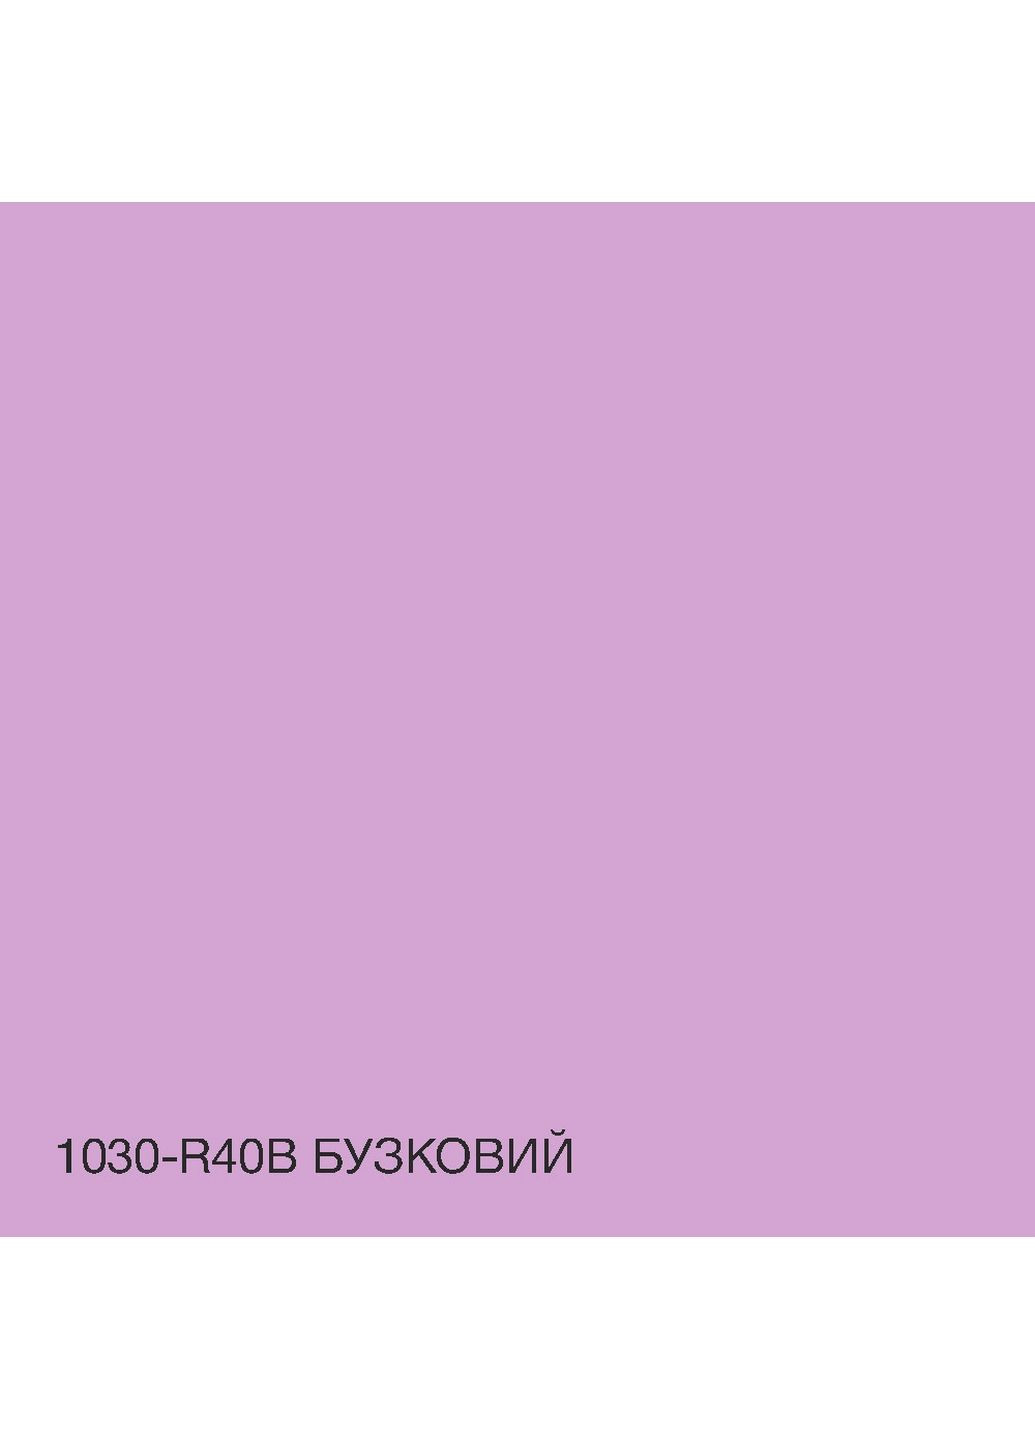 Інтер'єрна латексна фарба 1030-R40B 3 л SkyLine (289369633)